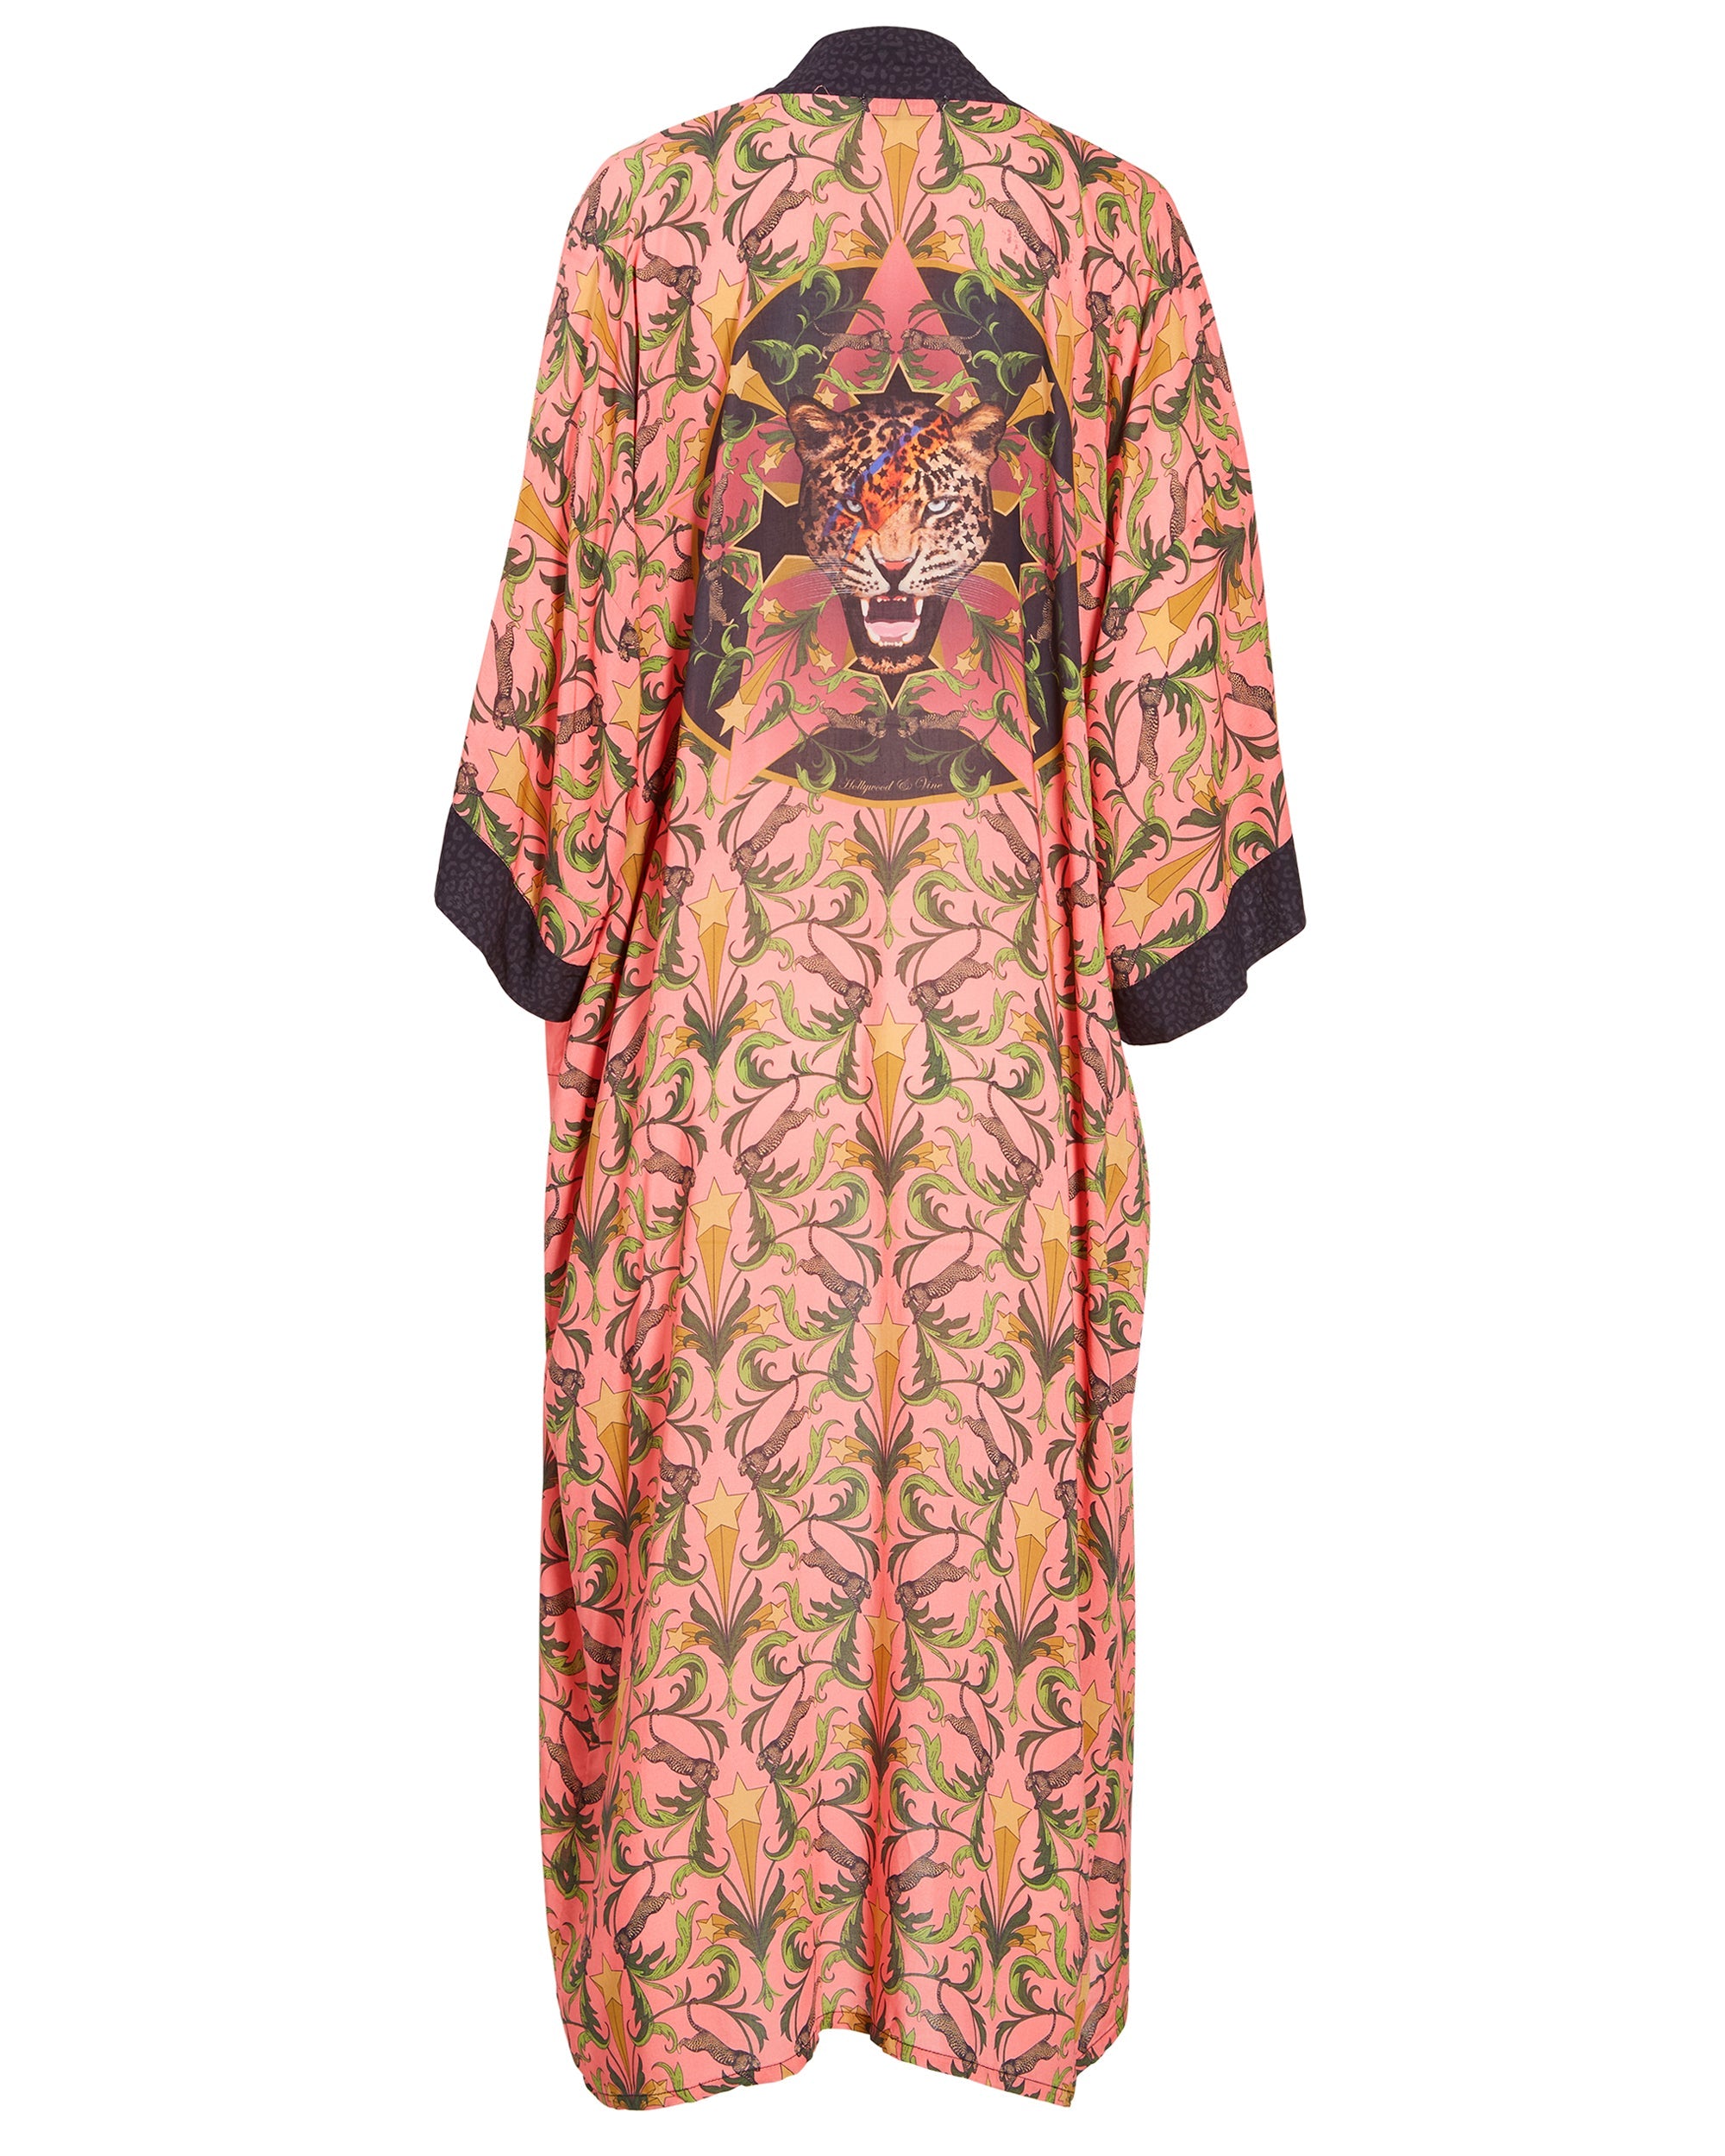 Hollywood Vine Kimono Robe & Sleep Mask Set